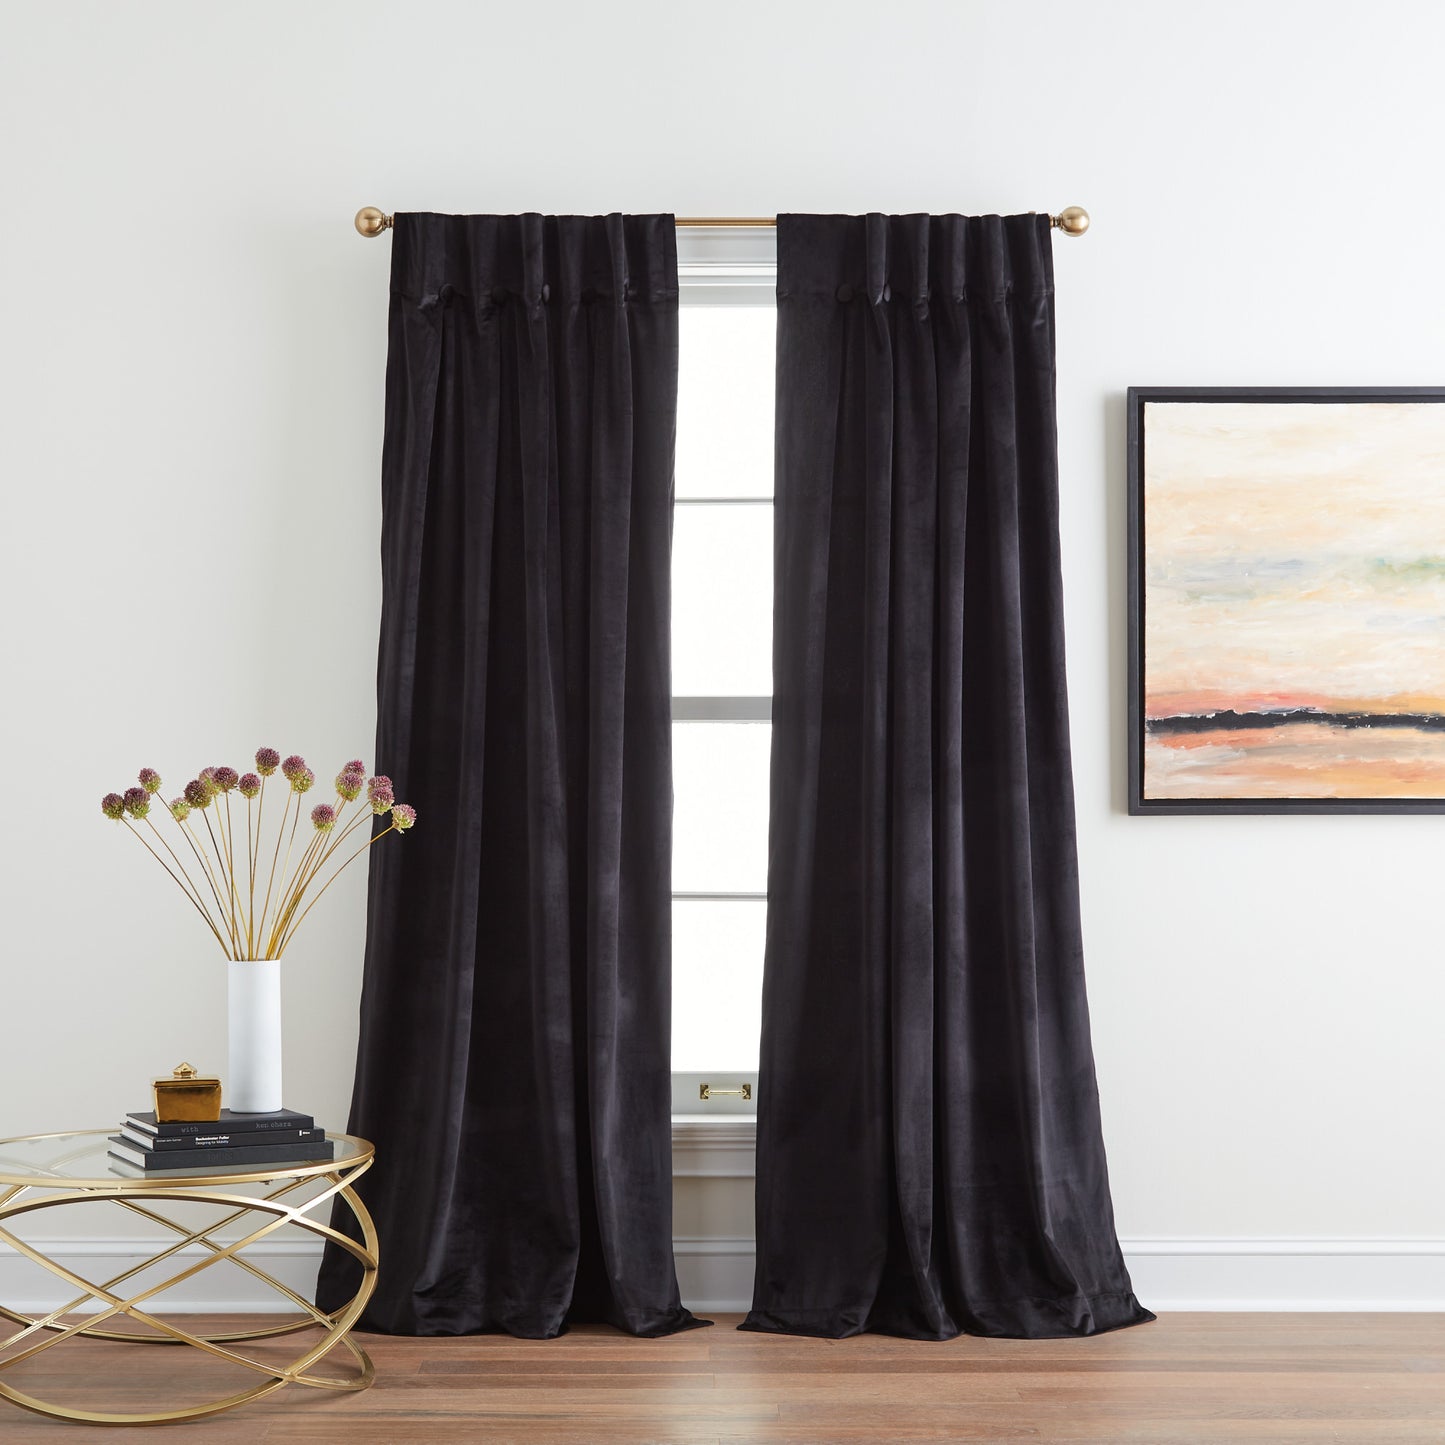 DKNY Velvet Inverted Pleat Curtain Panel Pair